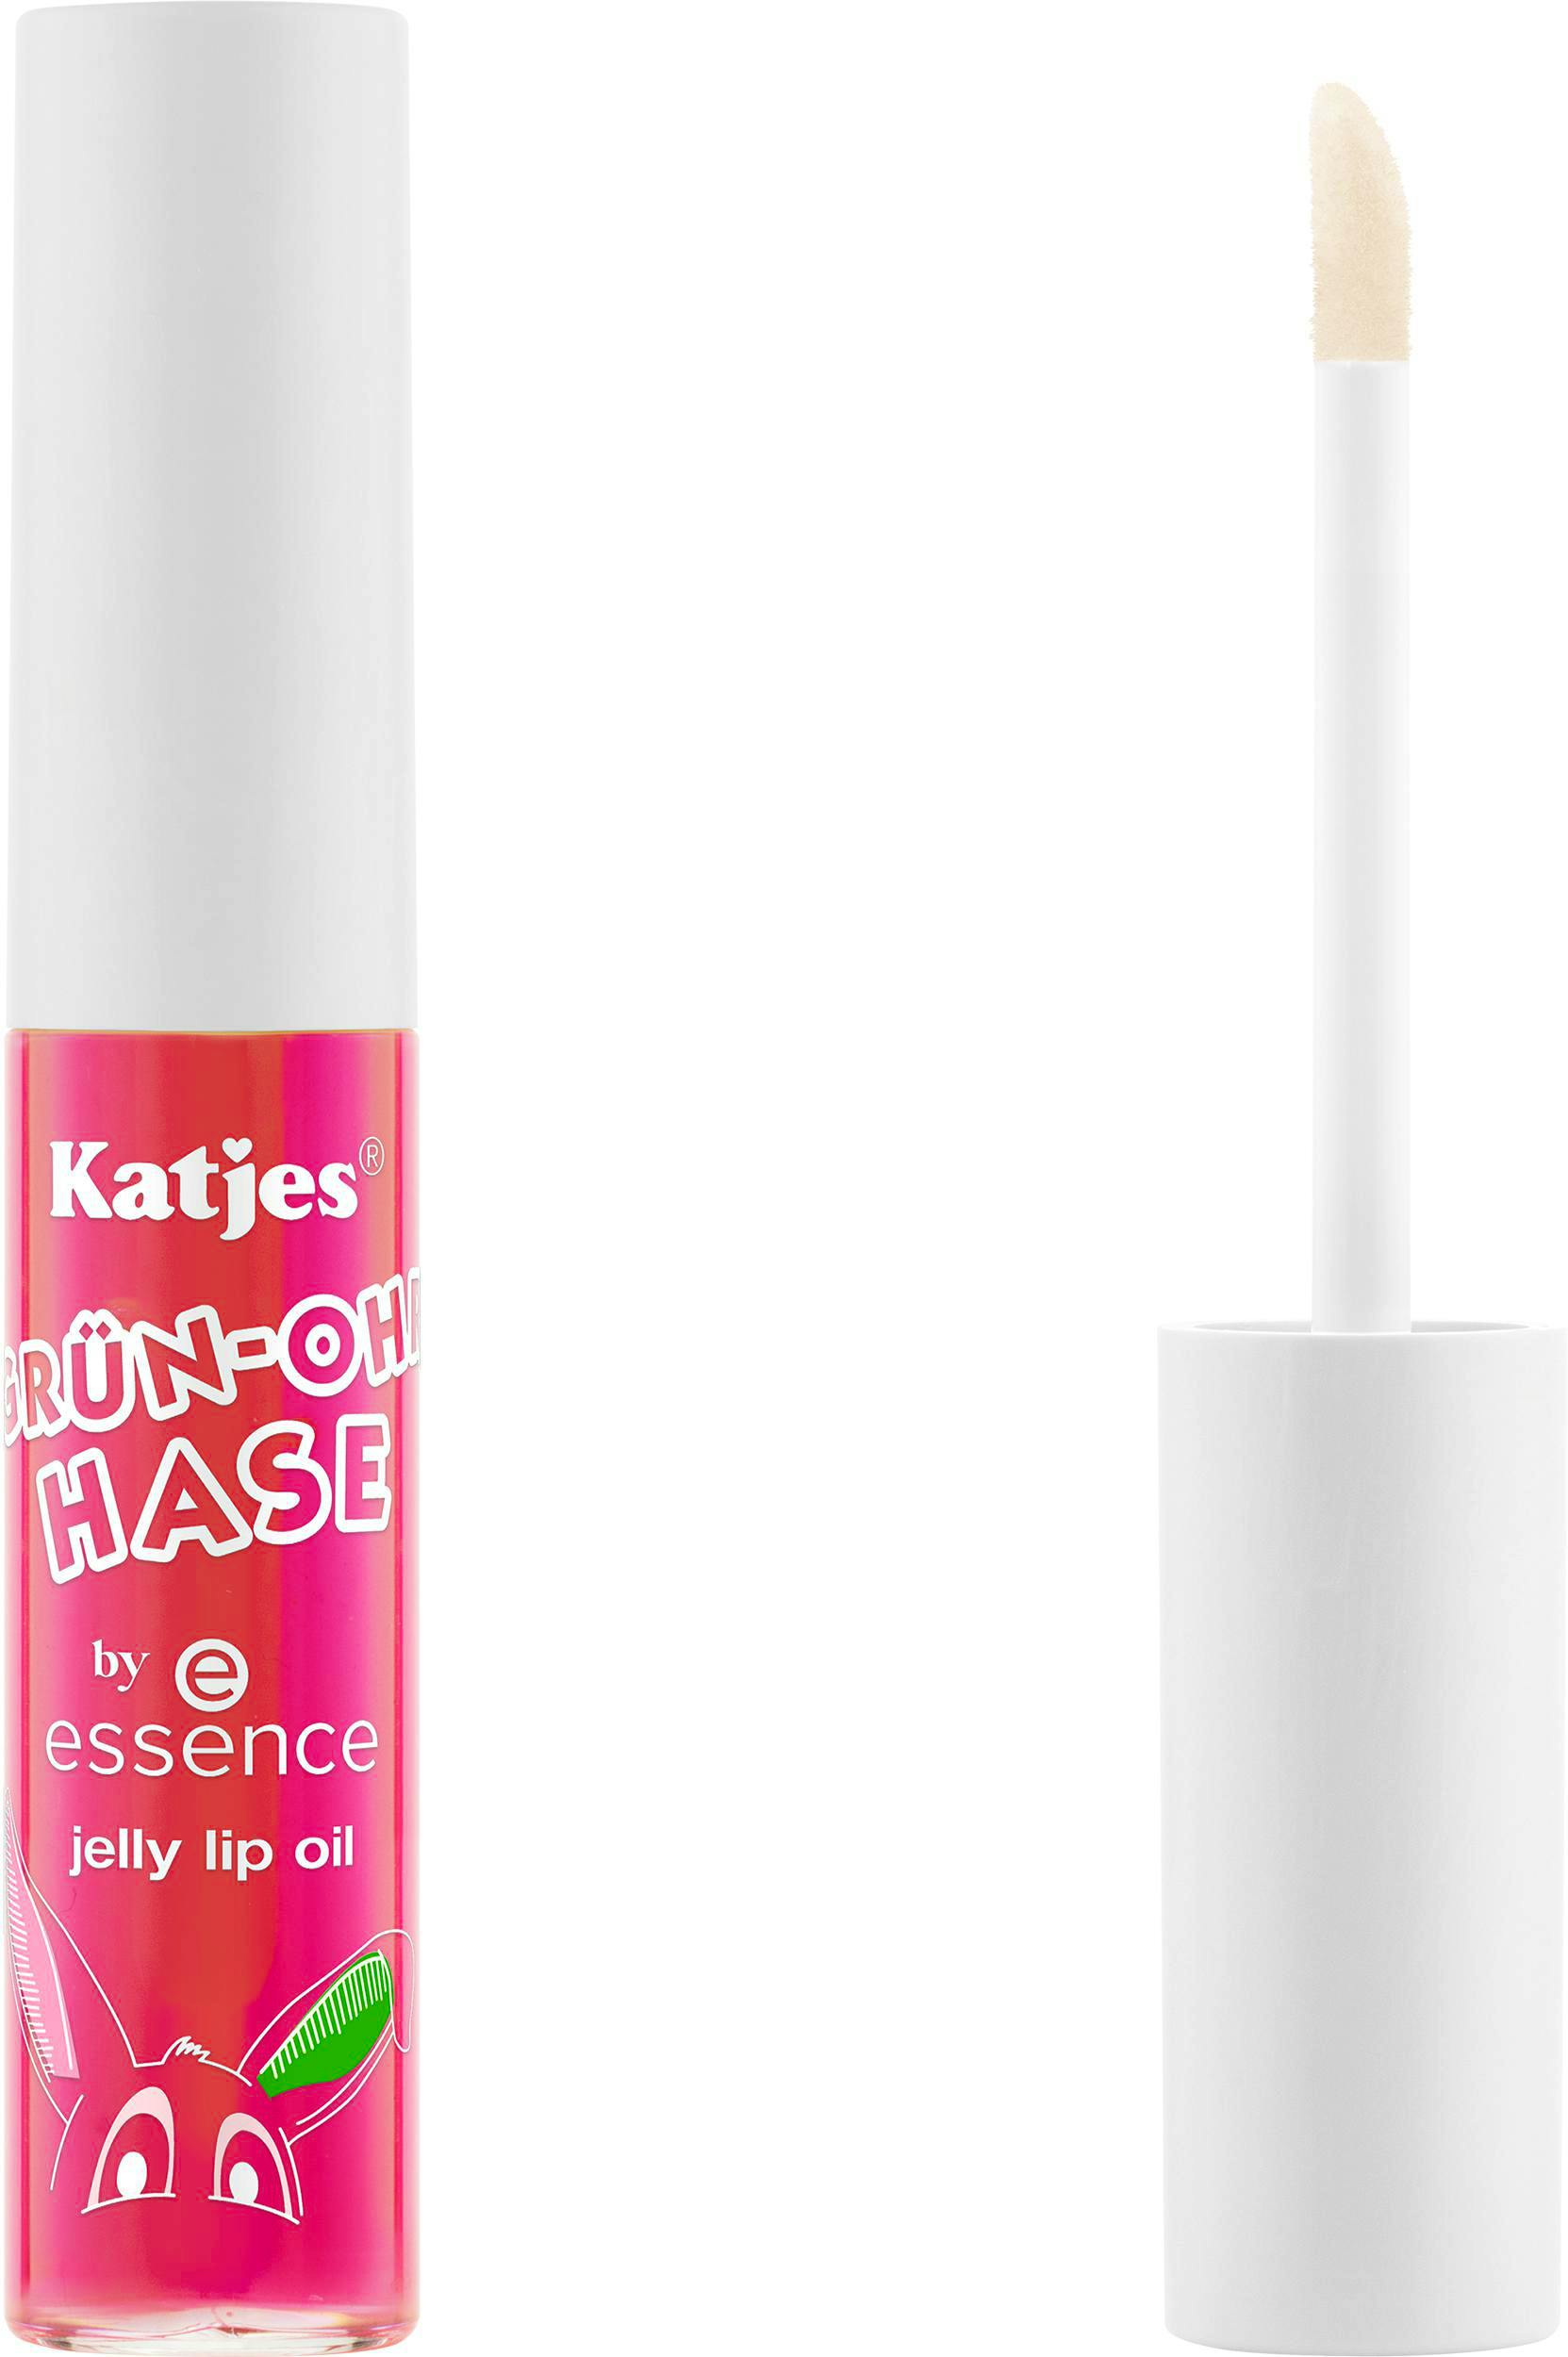 Essence Katjes Grün-Ohr Hase Essence Lip By Oil EUR Jelly ml - 01 9 2.89